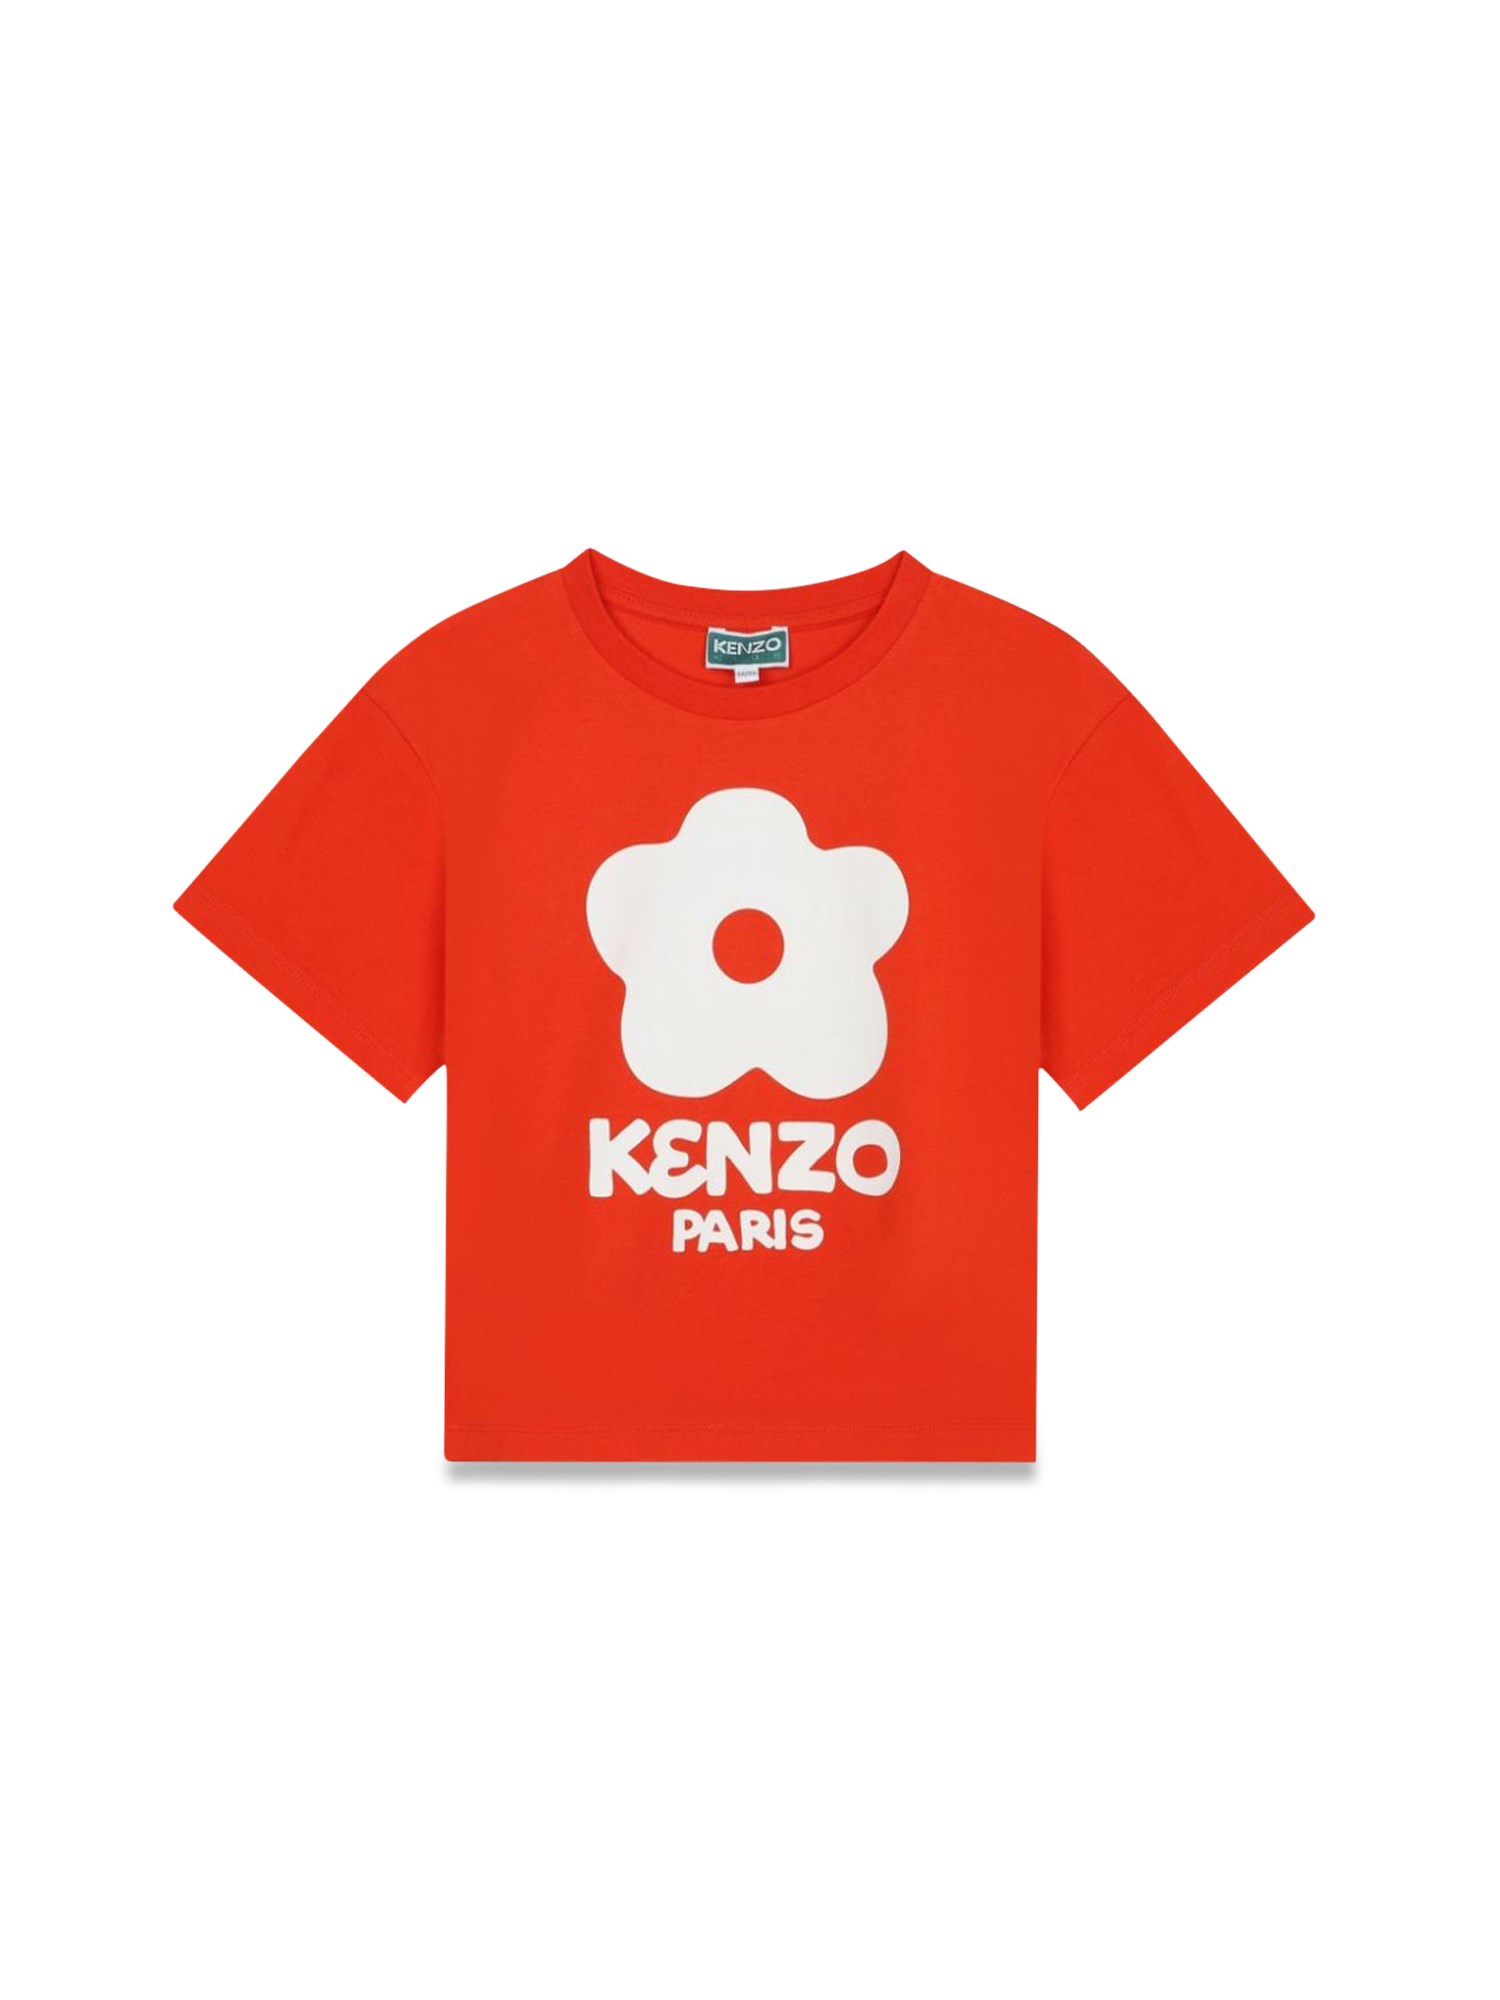 kenzo tee shirt